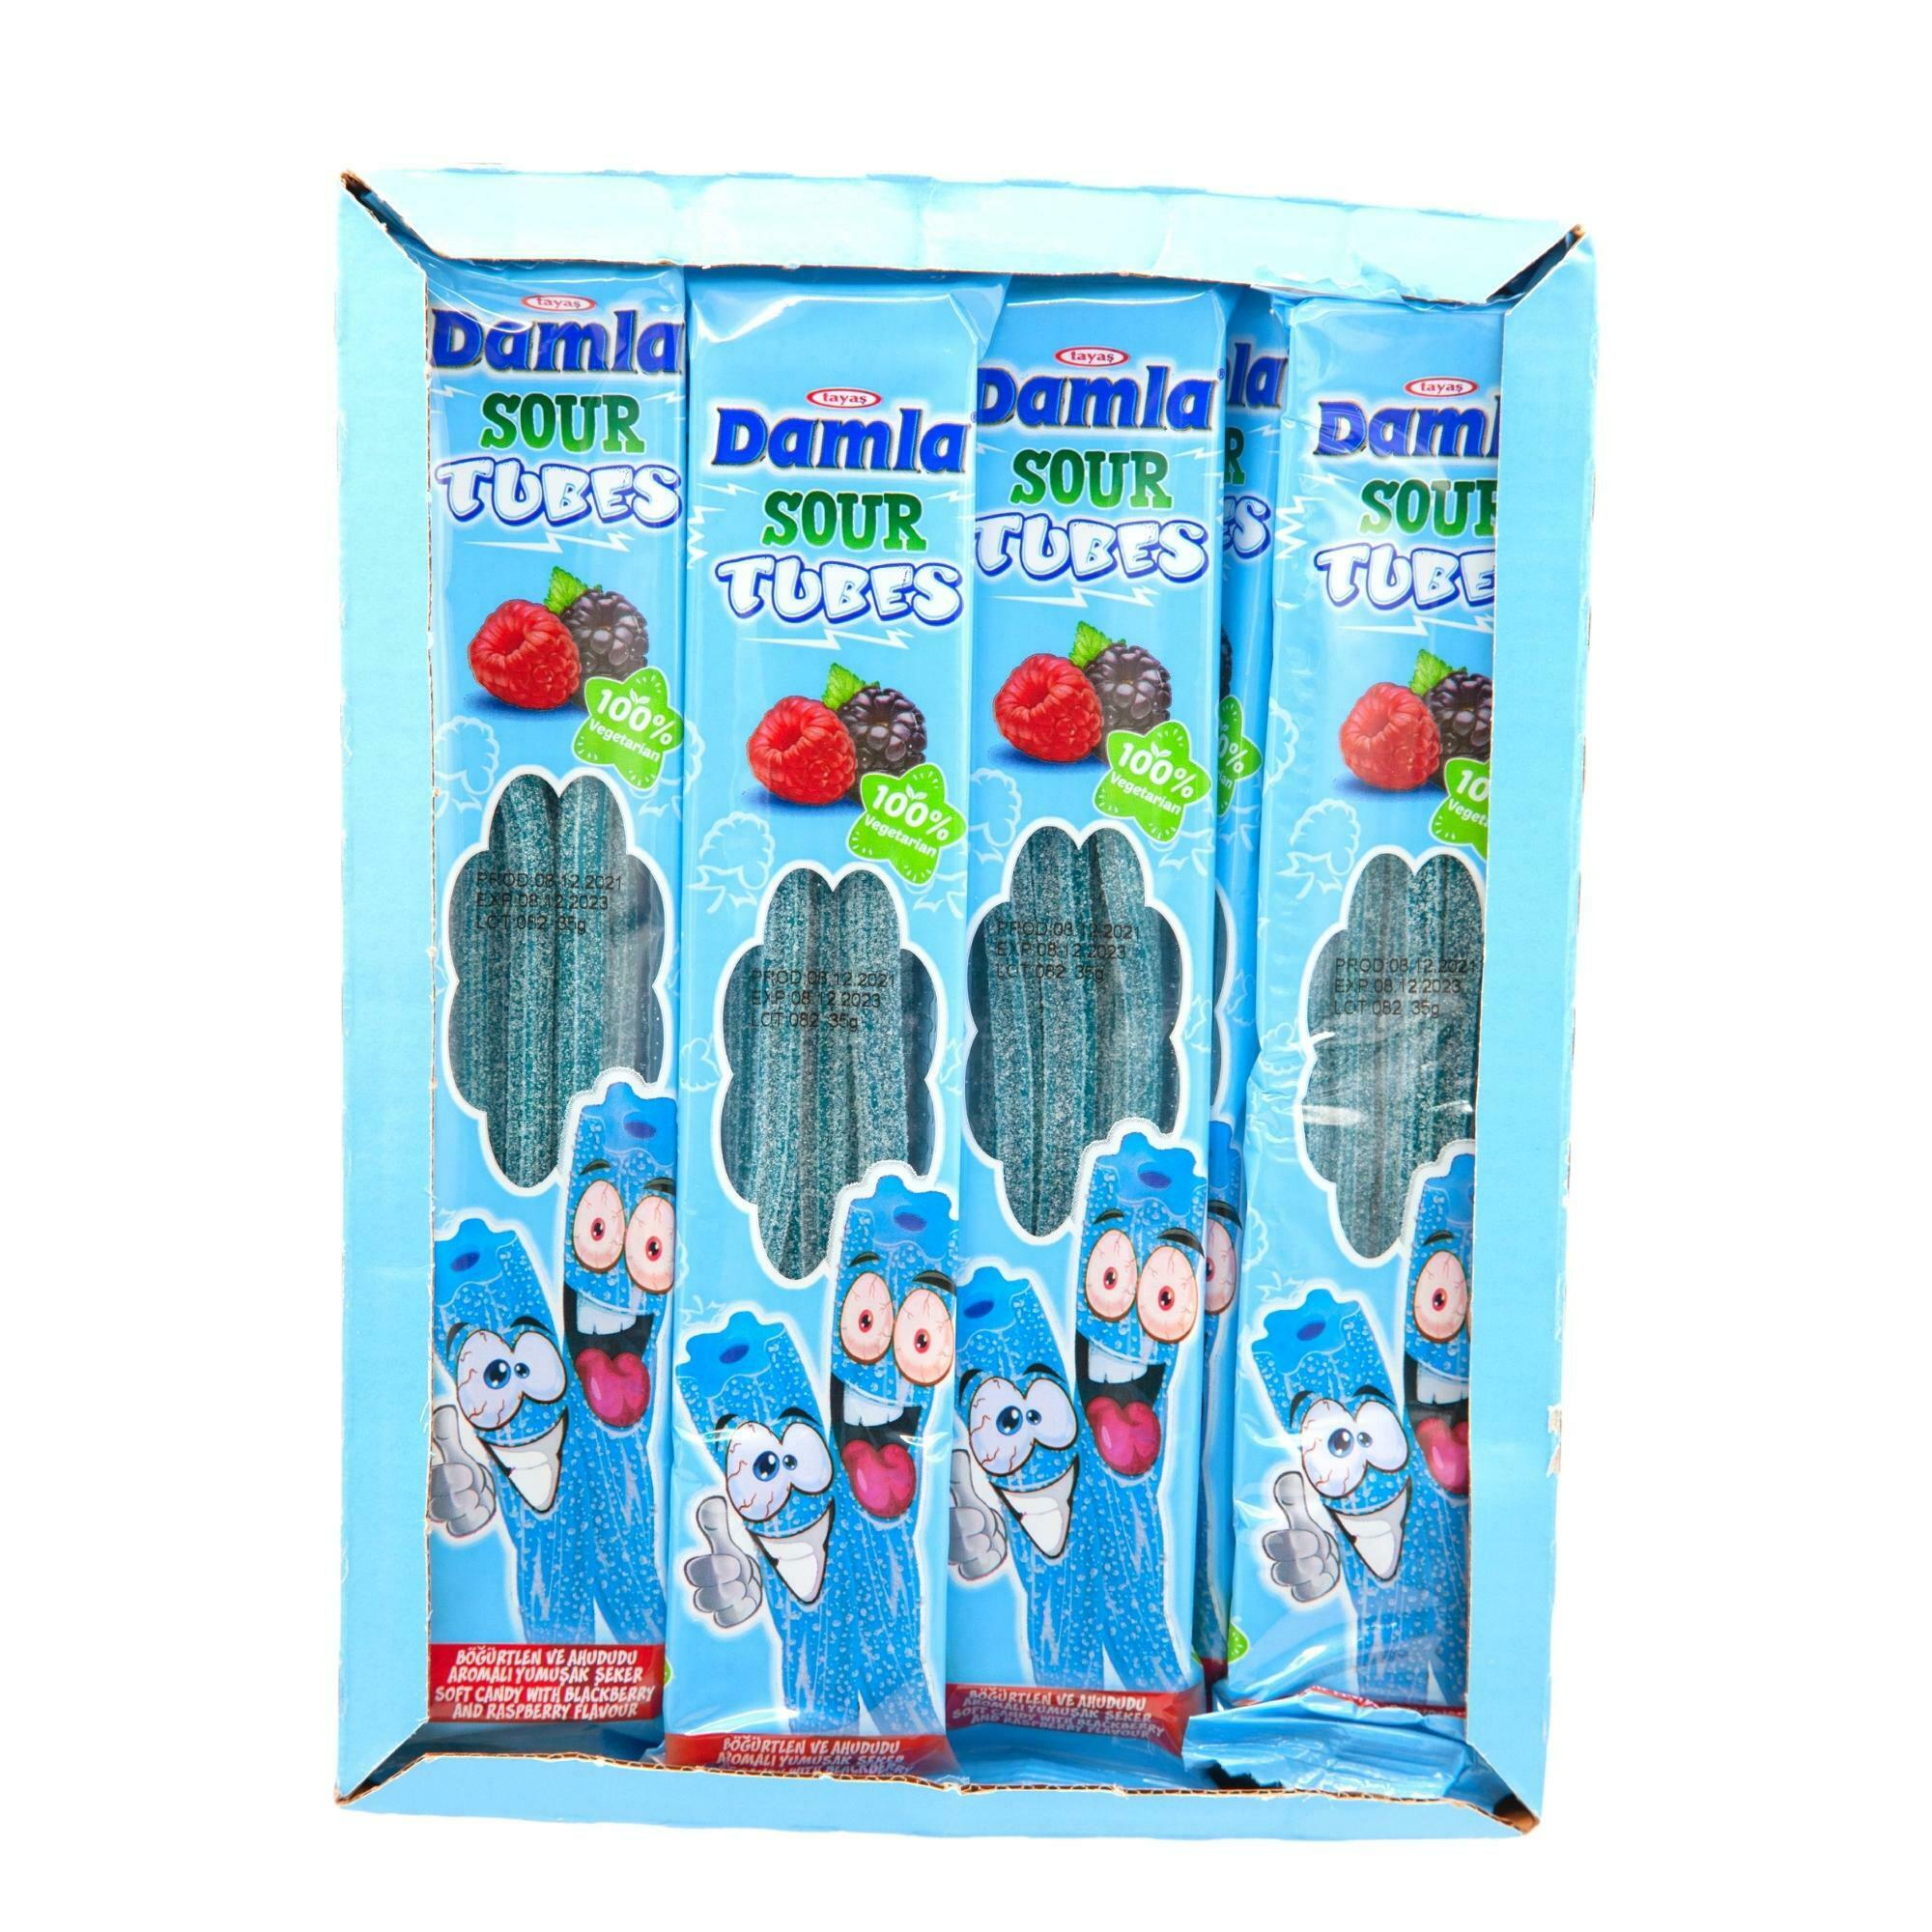 Damla Sour Licorice Tubes Raspberry & Blackberry (35Gx24pcs) - Aytac Foods